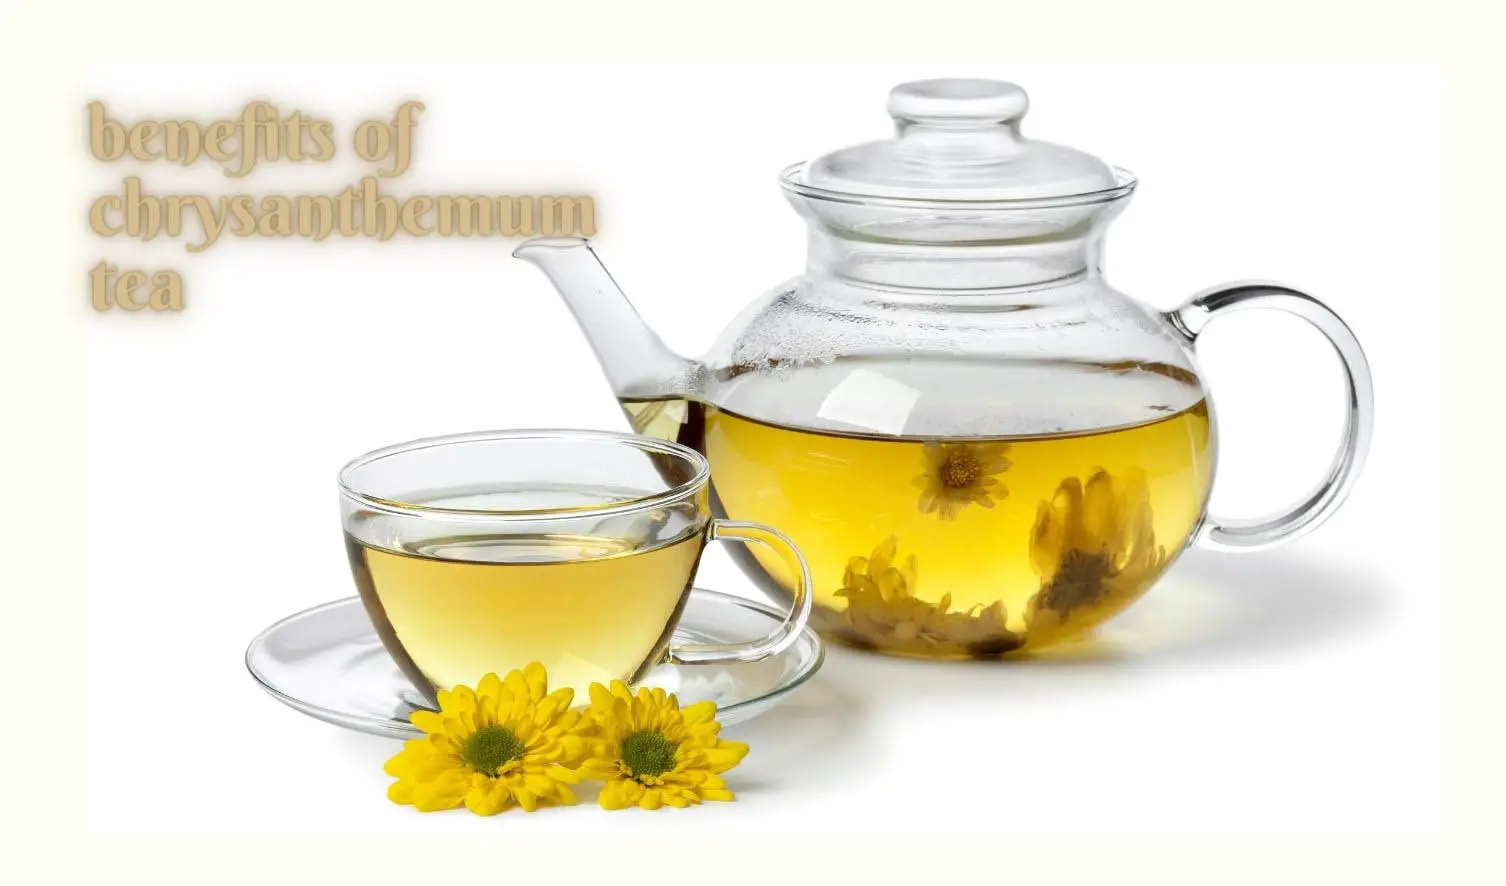 Benefits of chrysanthemum tea